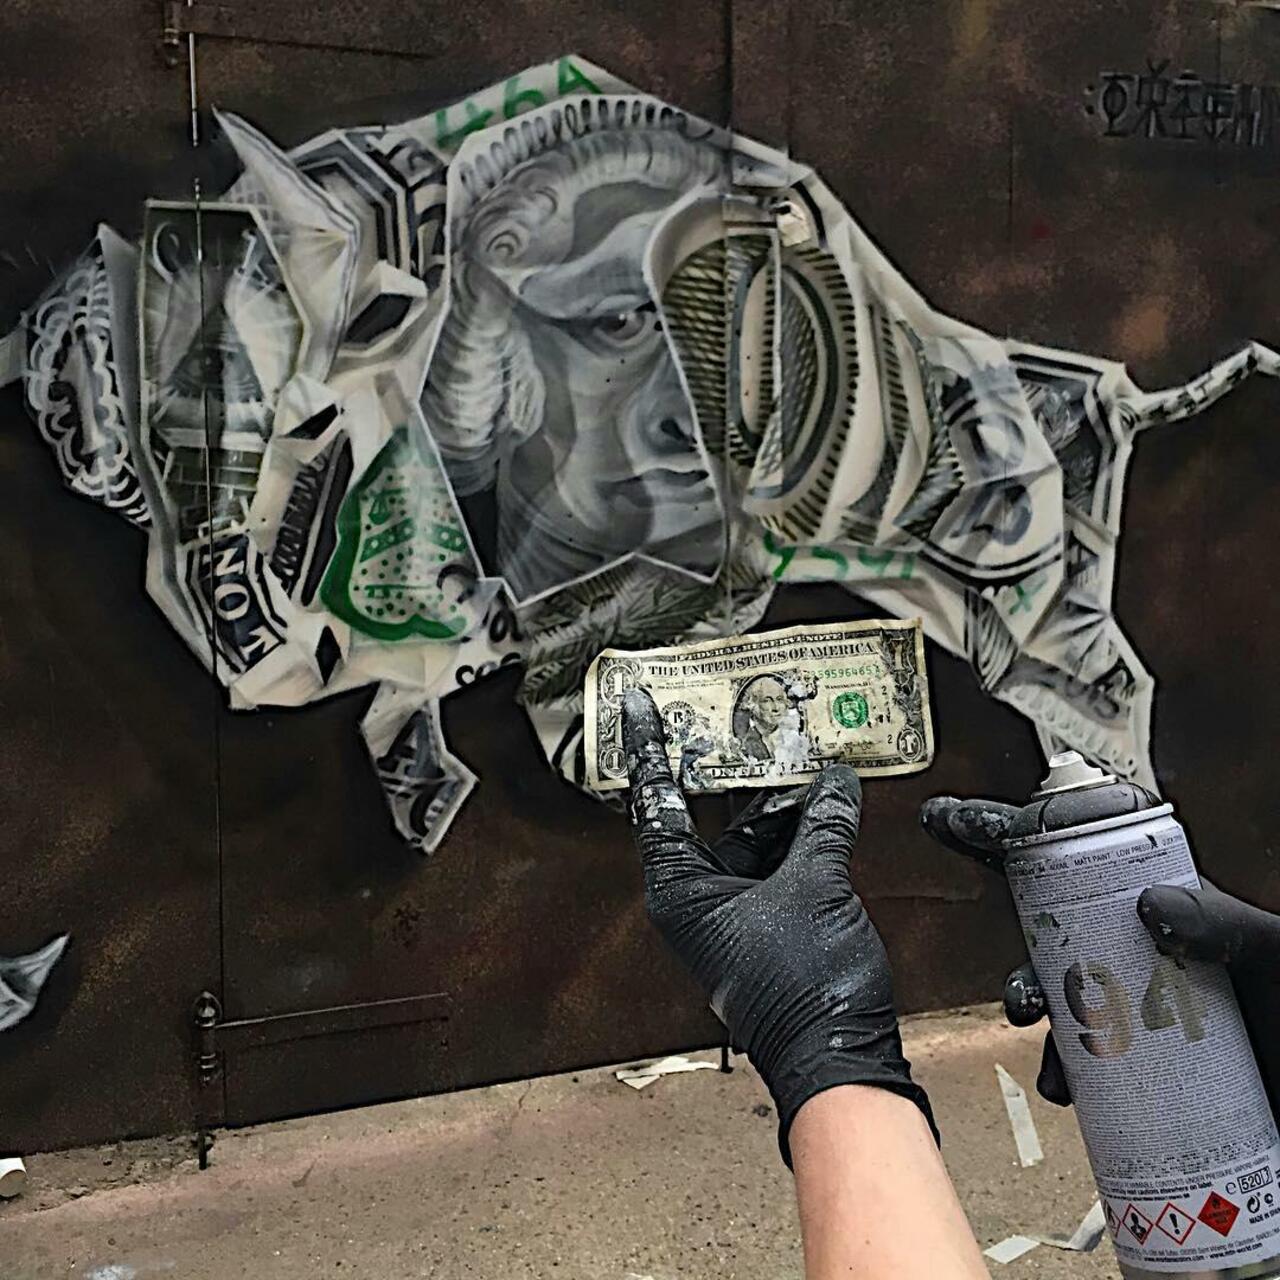  《 $O L D . M Y . $ O U L . F O R . A . C A N . O F . A E R O $ O L 》  ★ #OrigamiRiots ★ #graffiti #streetart https://t.co/2hsVKvvejQ